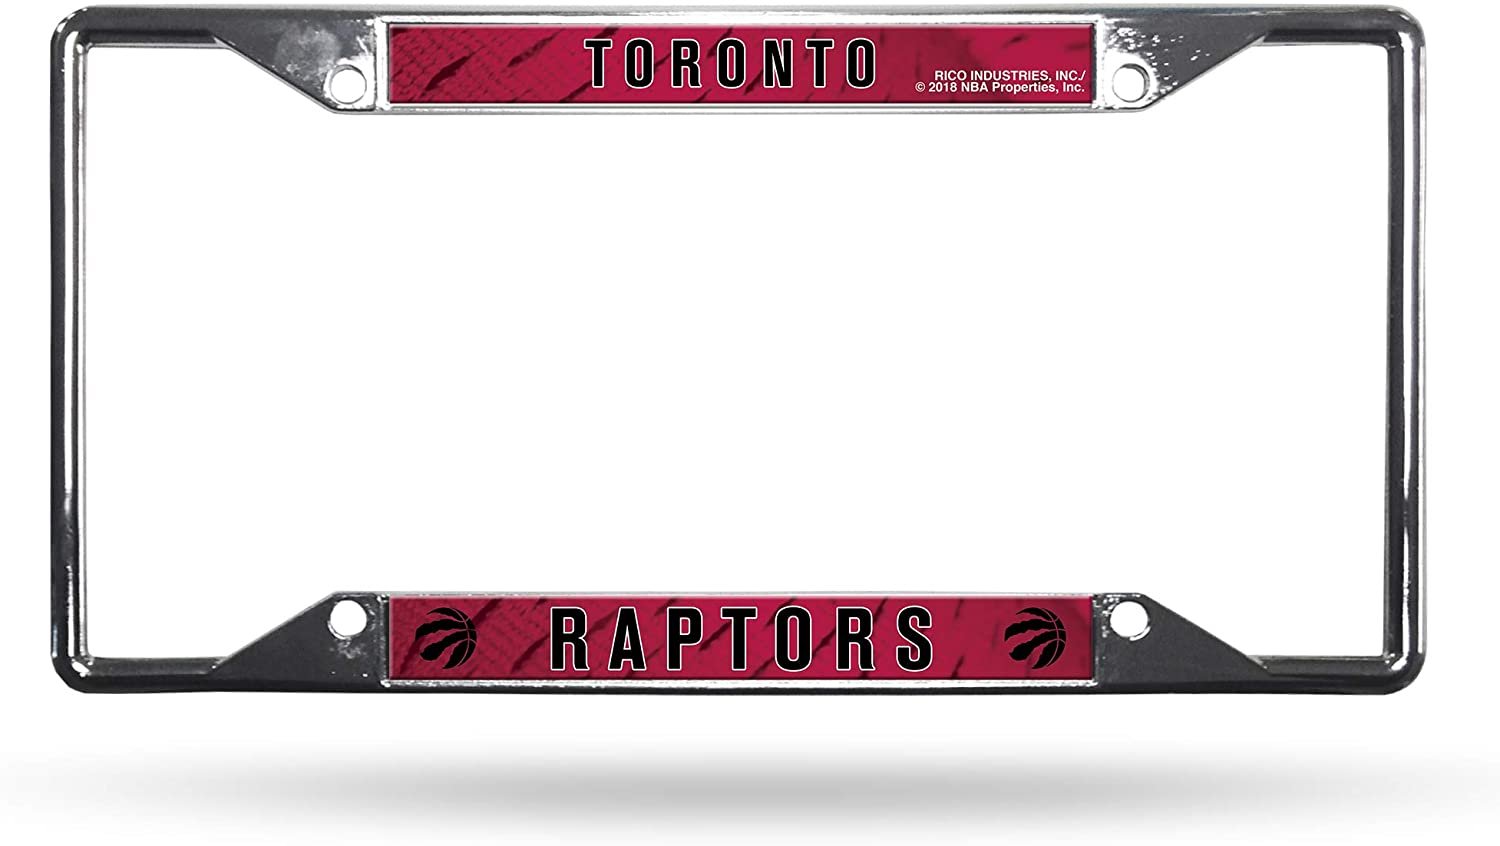 Toronto Raptors Premium Metal License Plate Frame Chrome Tag Cover, EZ View Design, 12x6 Inch